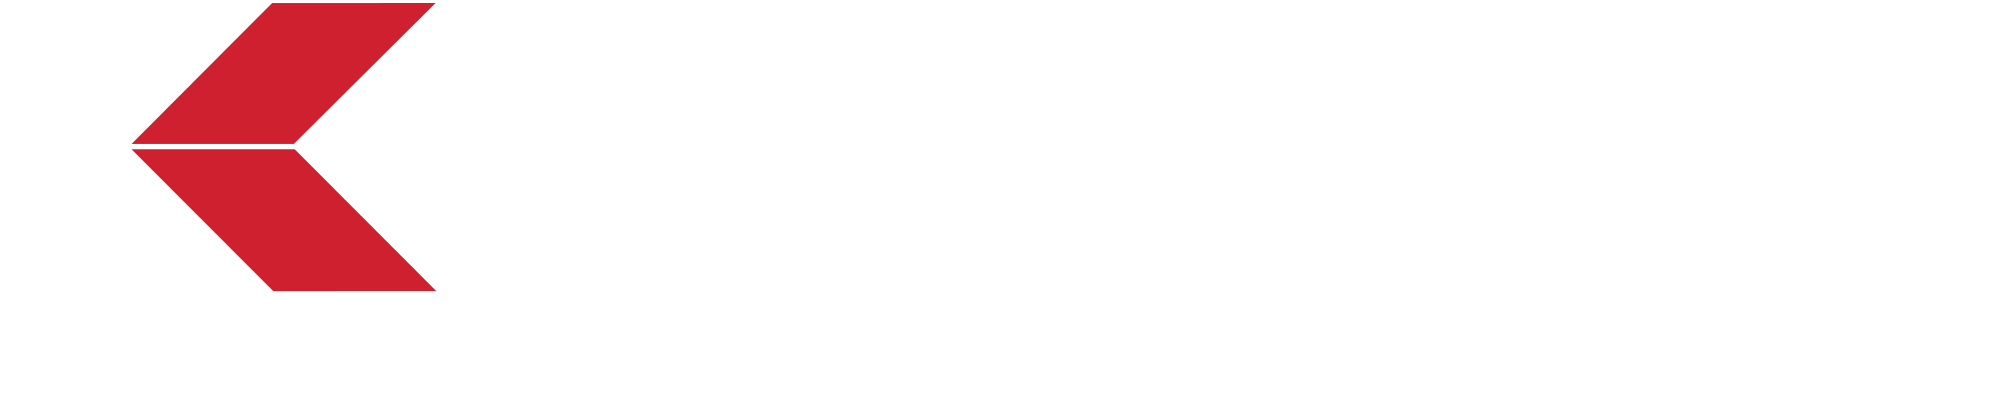 King Plastic Corporation logo